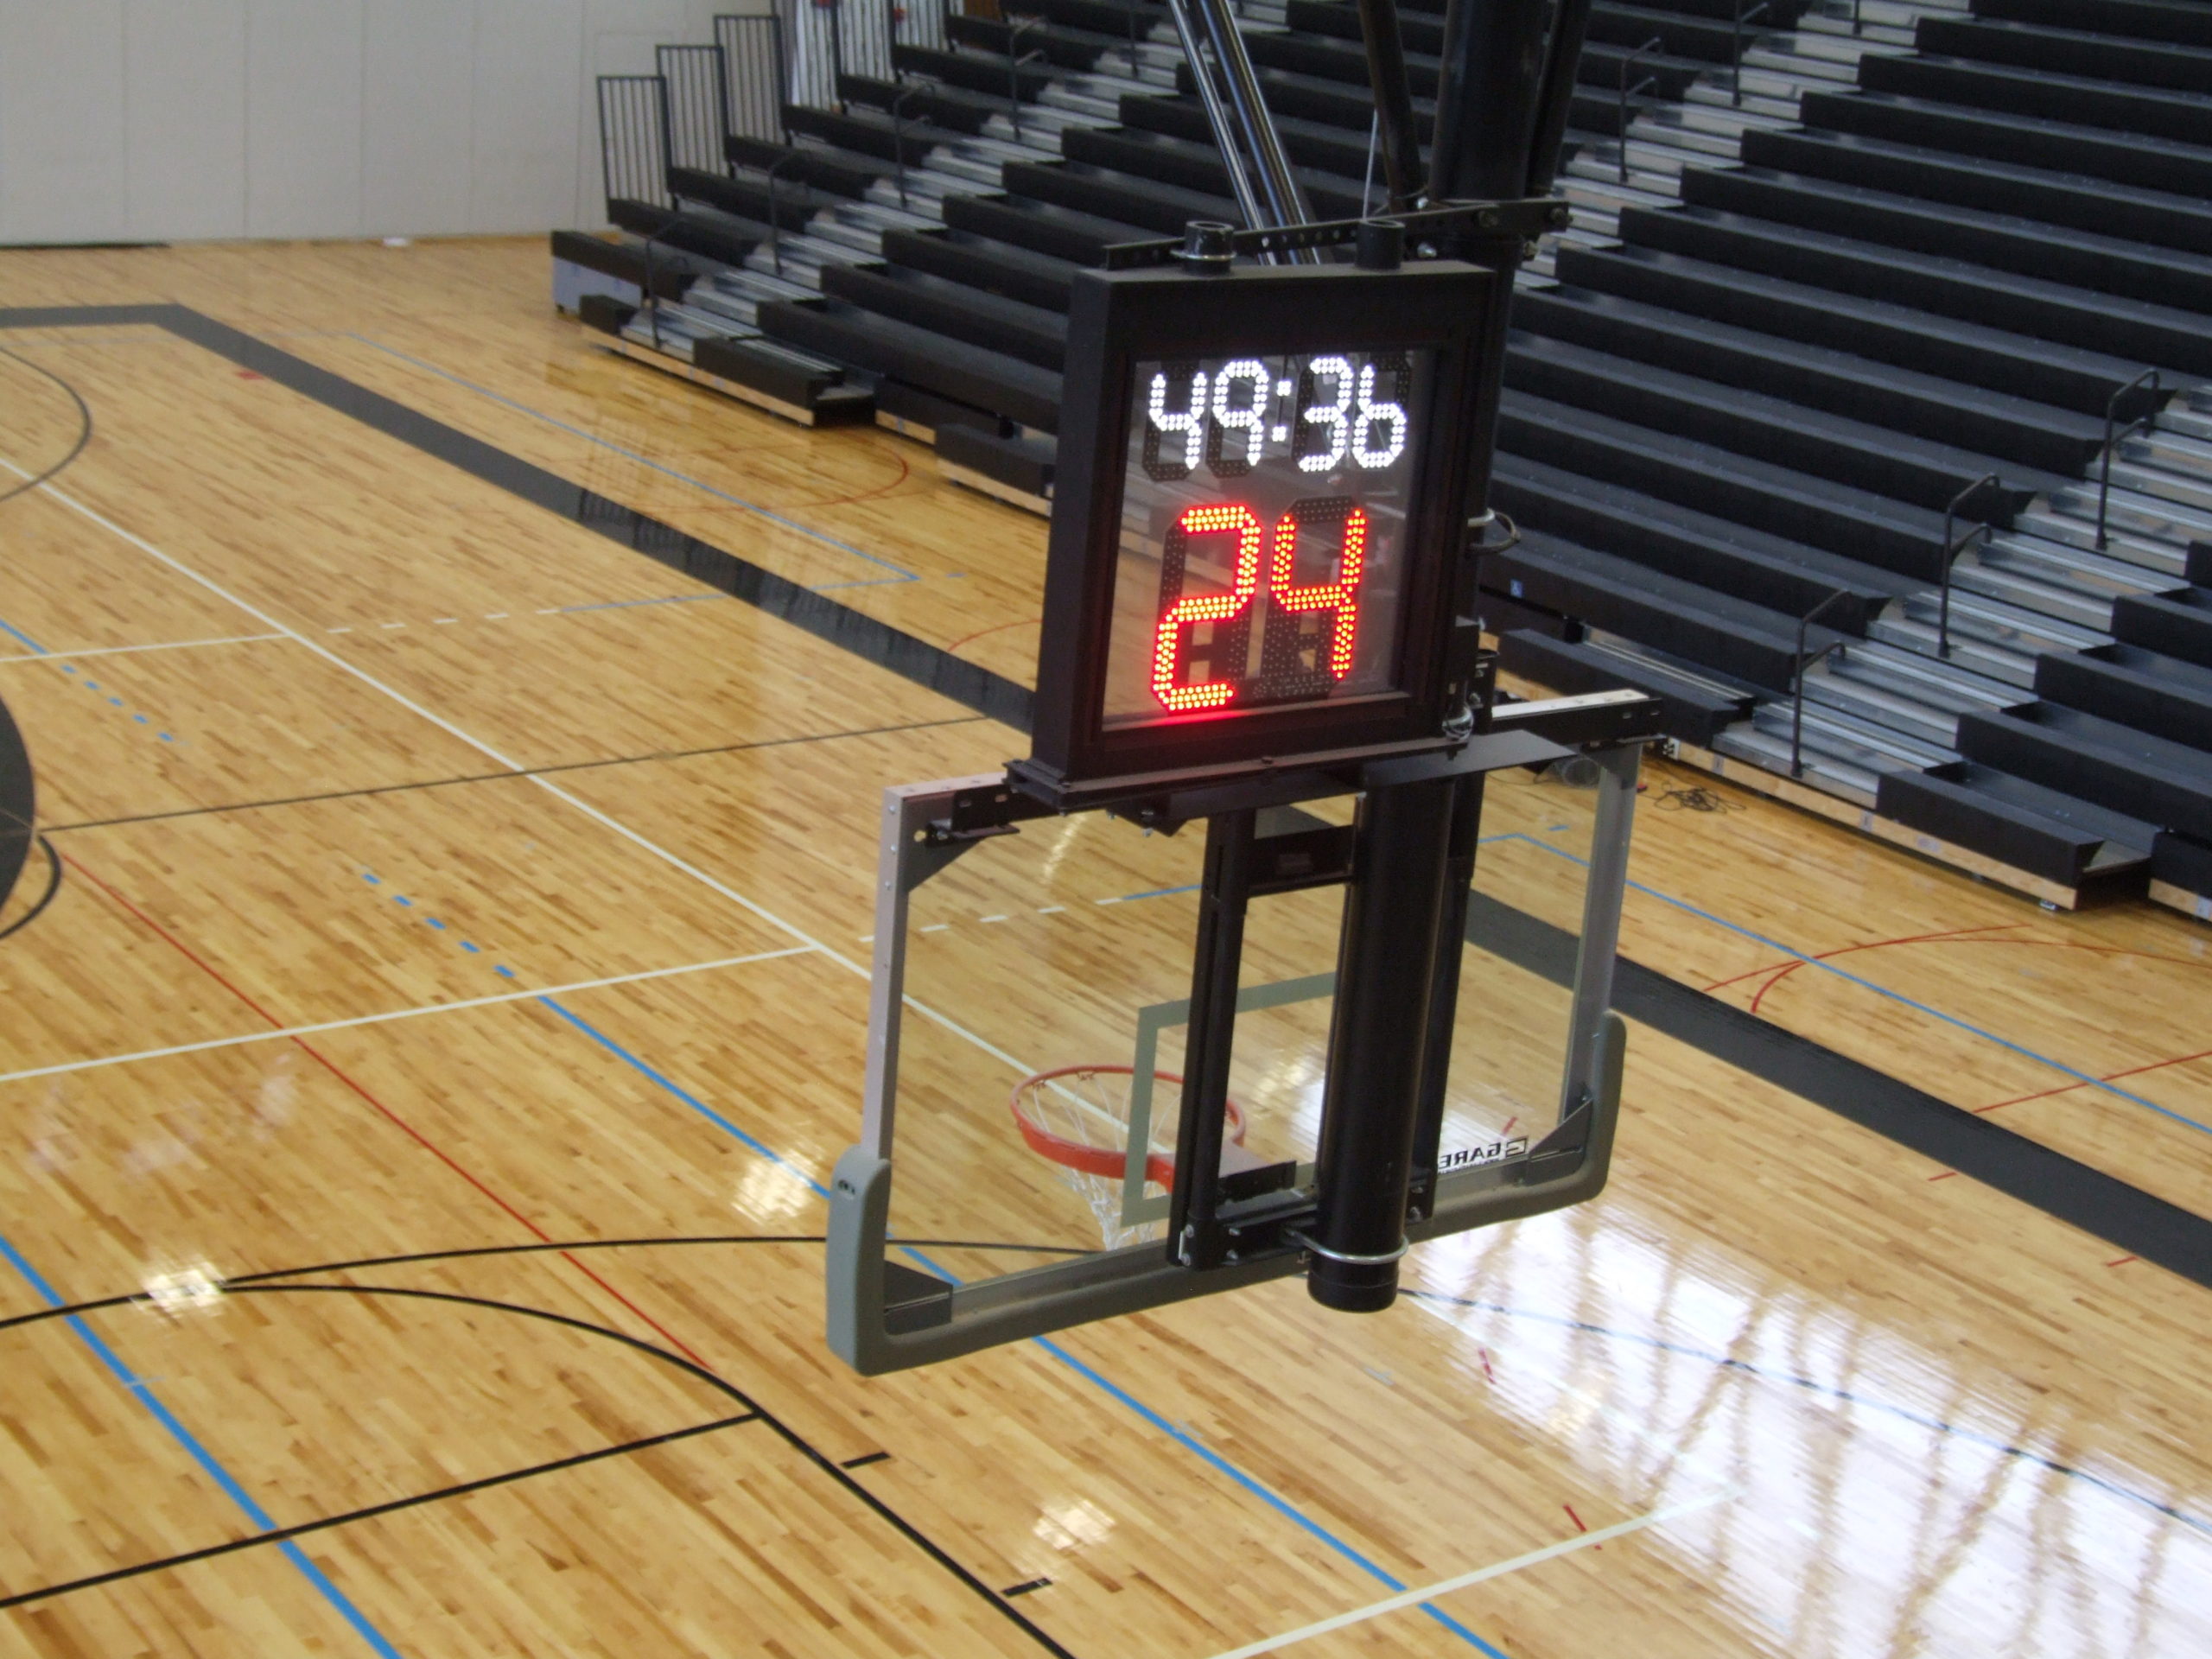 basketball timer clock